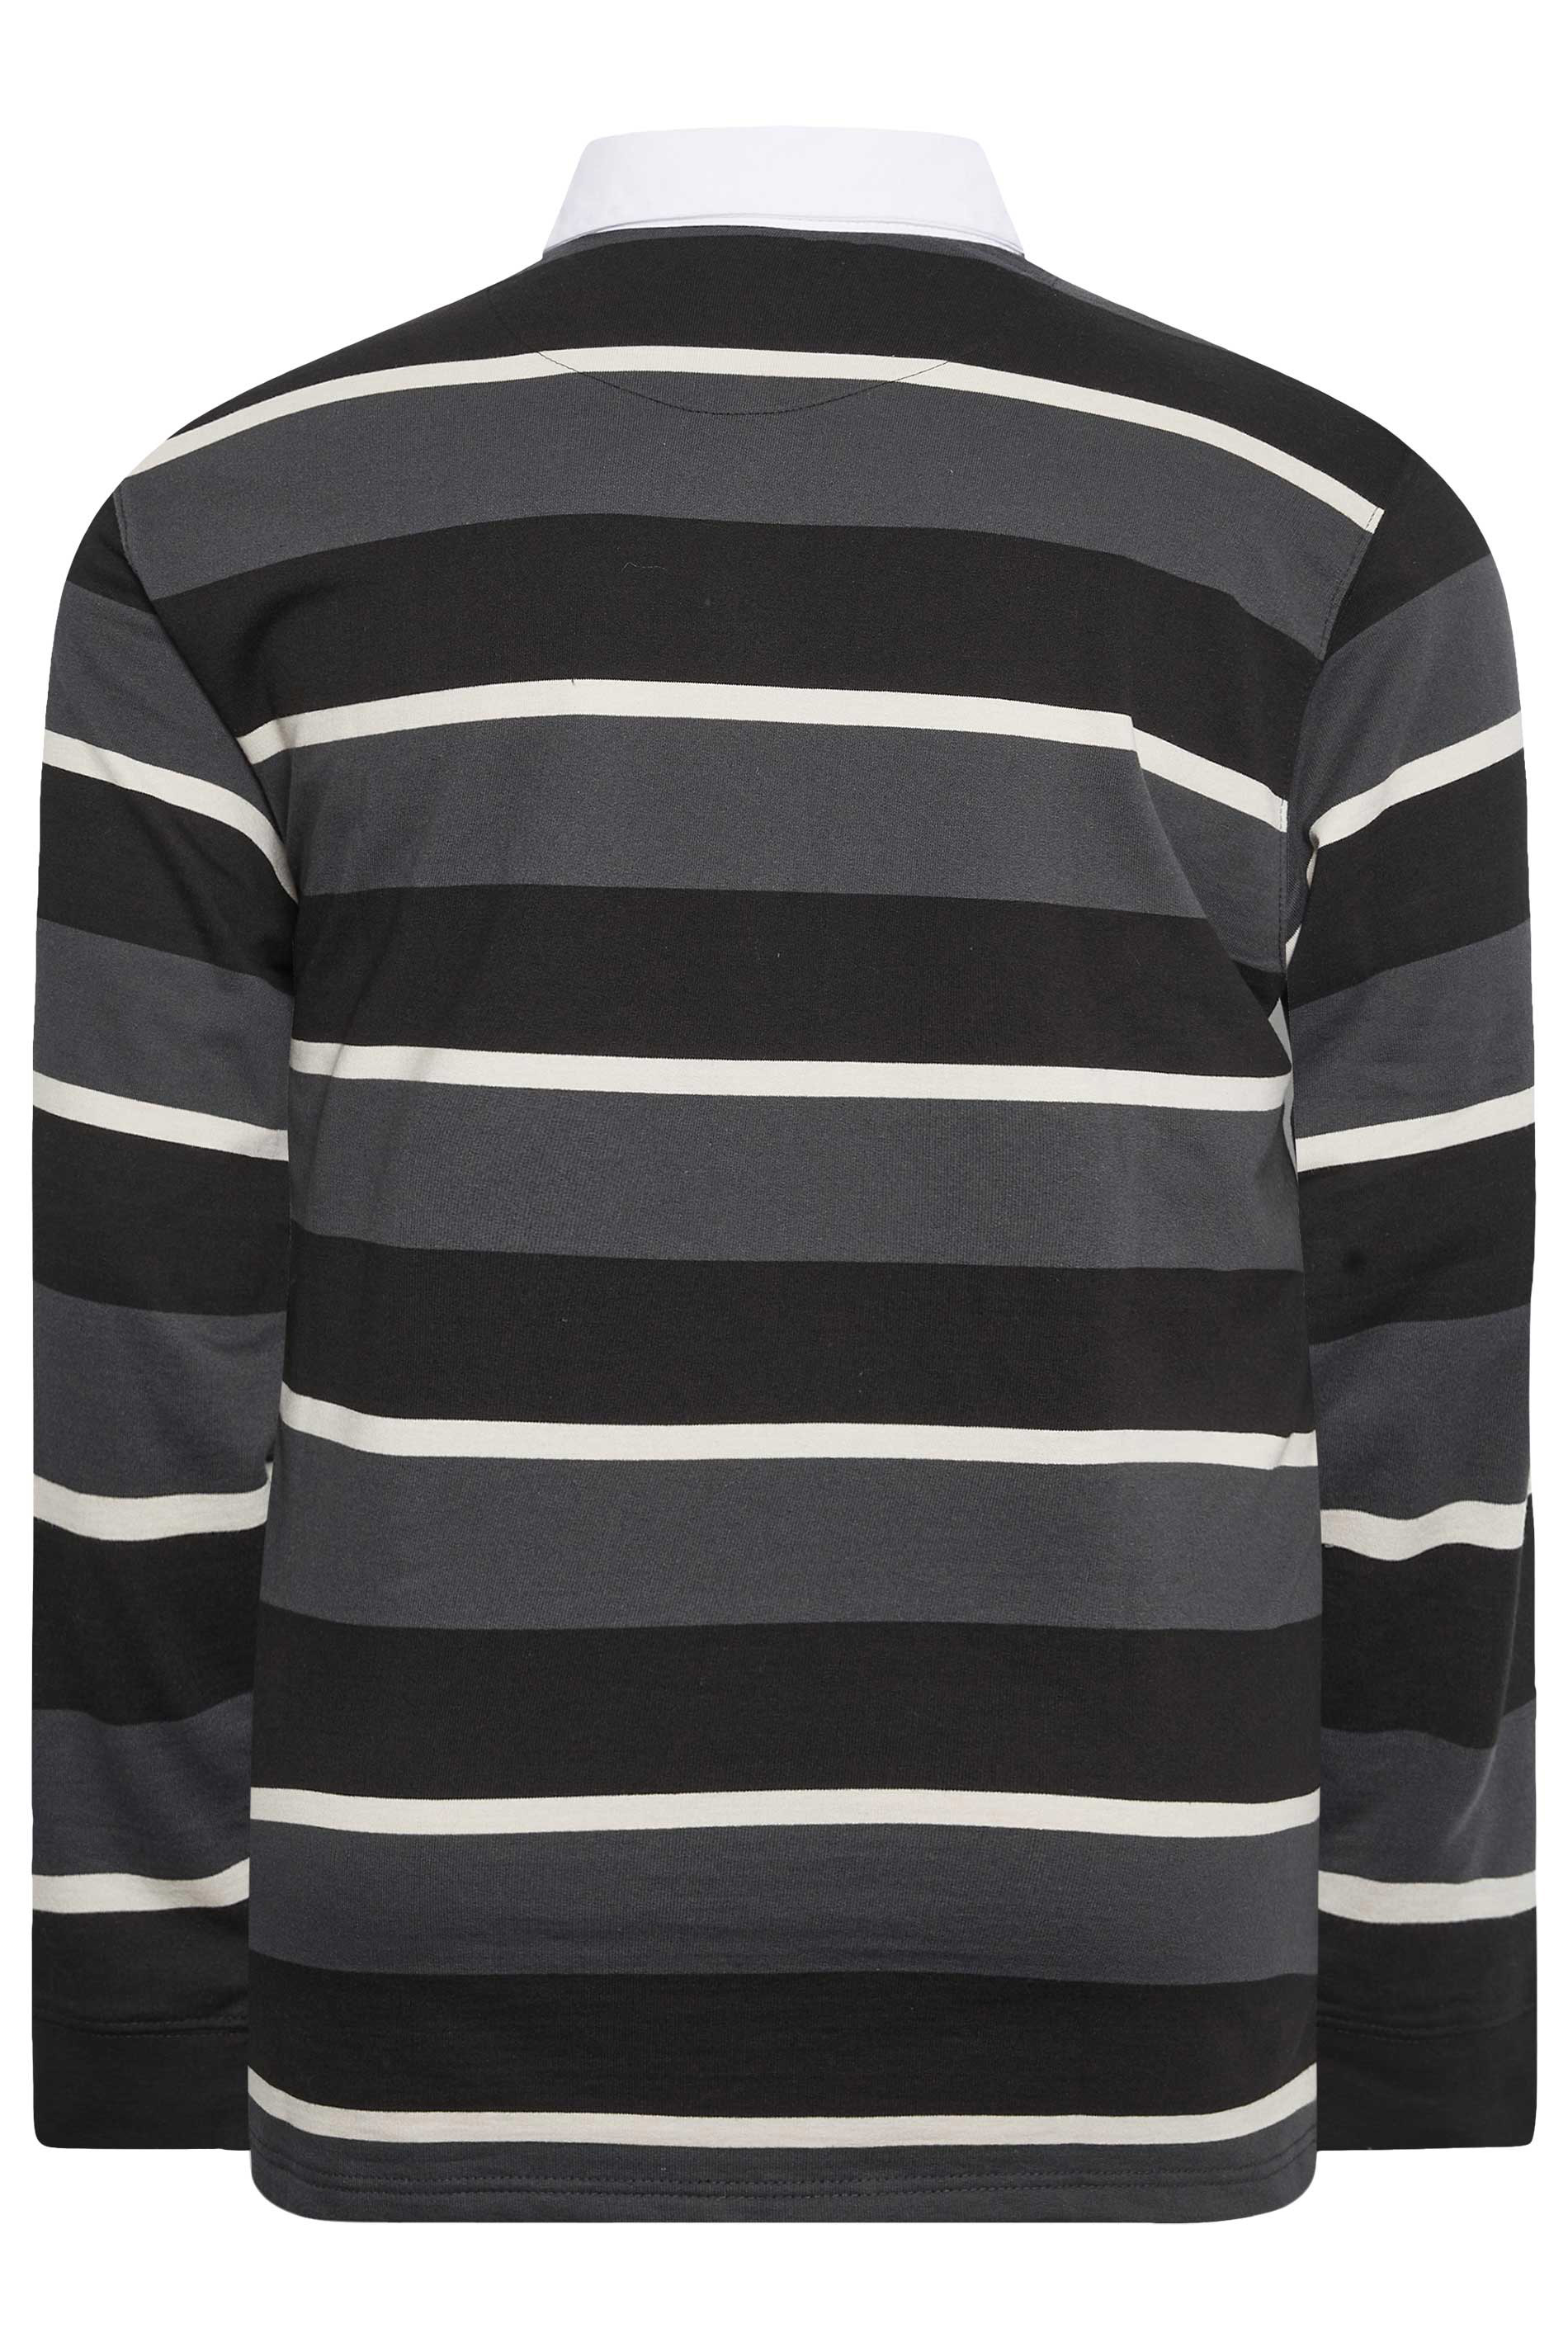 KAM Big & Tall Charcoal Grey Striped Long Sleeve Rugby Shirt | BadRhino 2